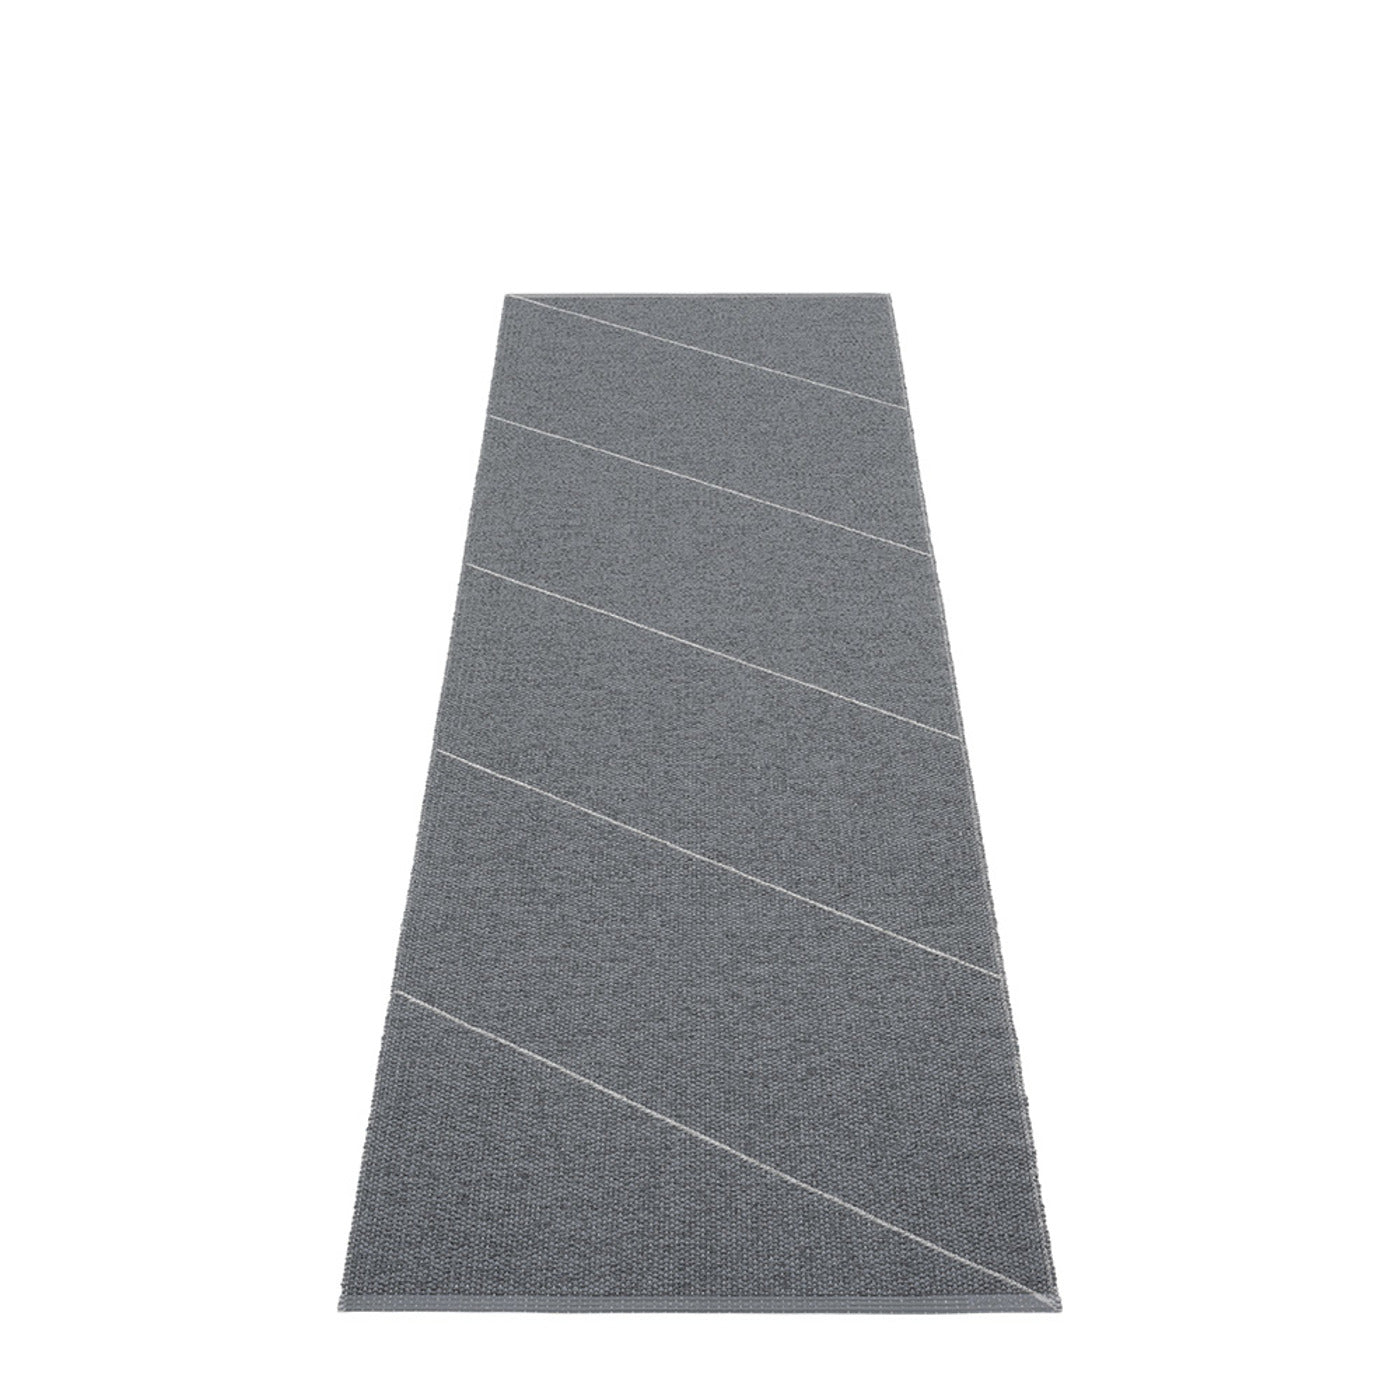 Sagg Main Plastic Floor Mats Granit (Multiple Sizes)